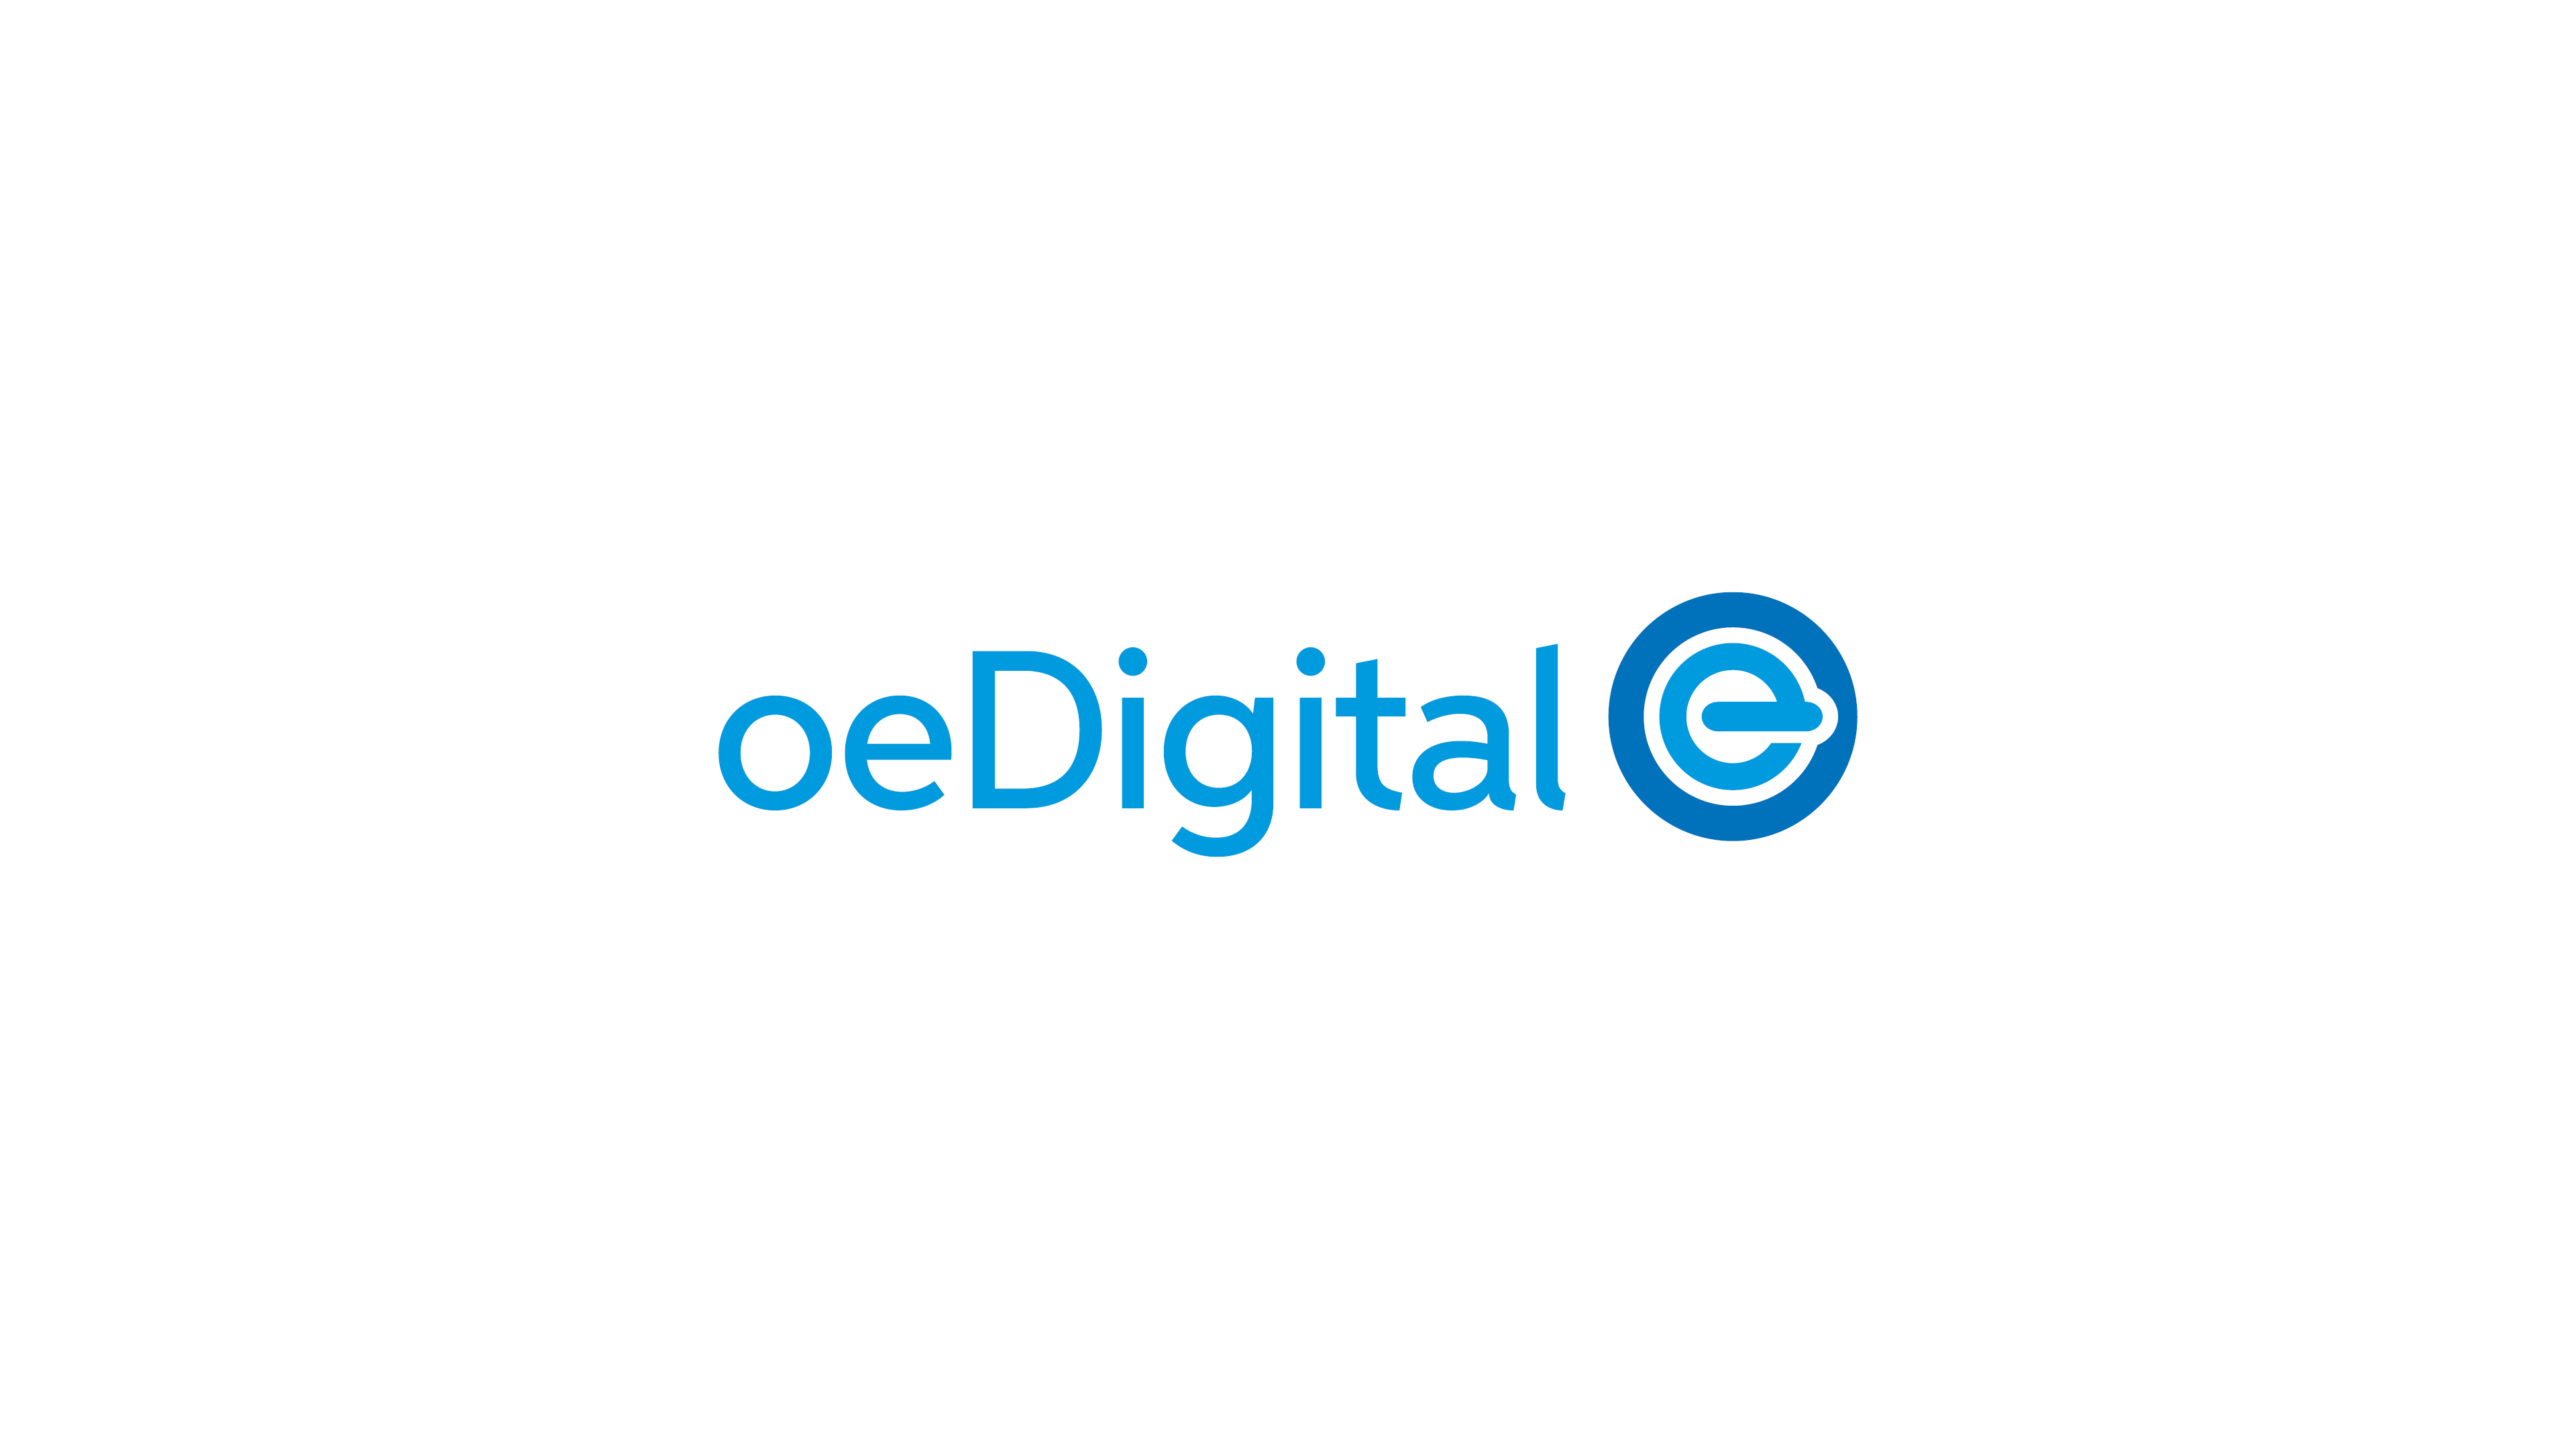 oeDigital Logo and Brand Design - Saunders Design Group